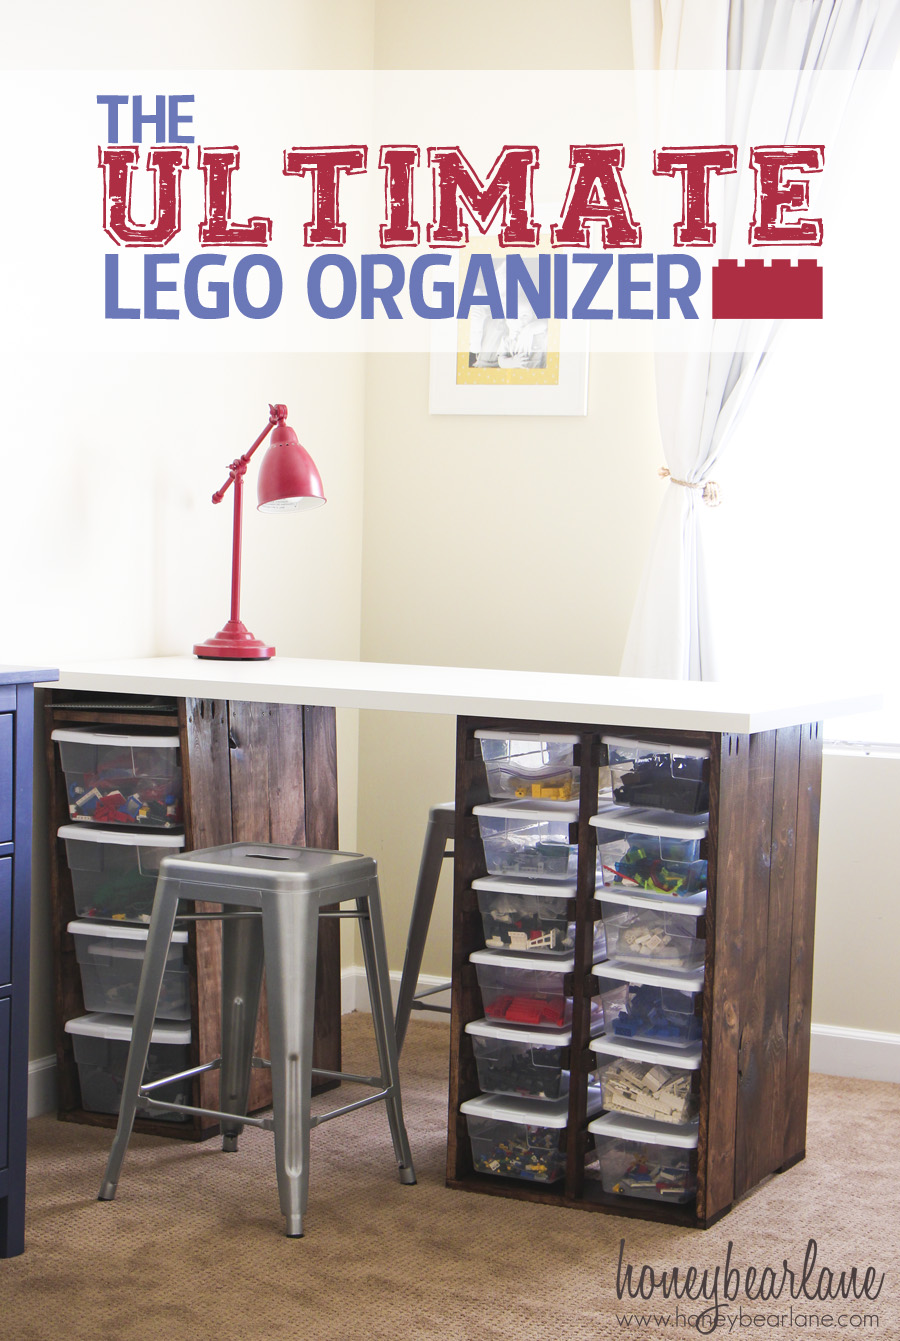 https://www.honeybearlane.com/wp-content/uploads/2013/05/The-Ultimate-Lego-Organizer.jpg